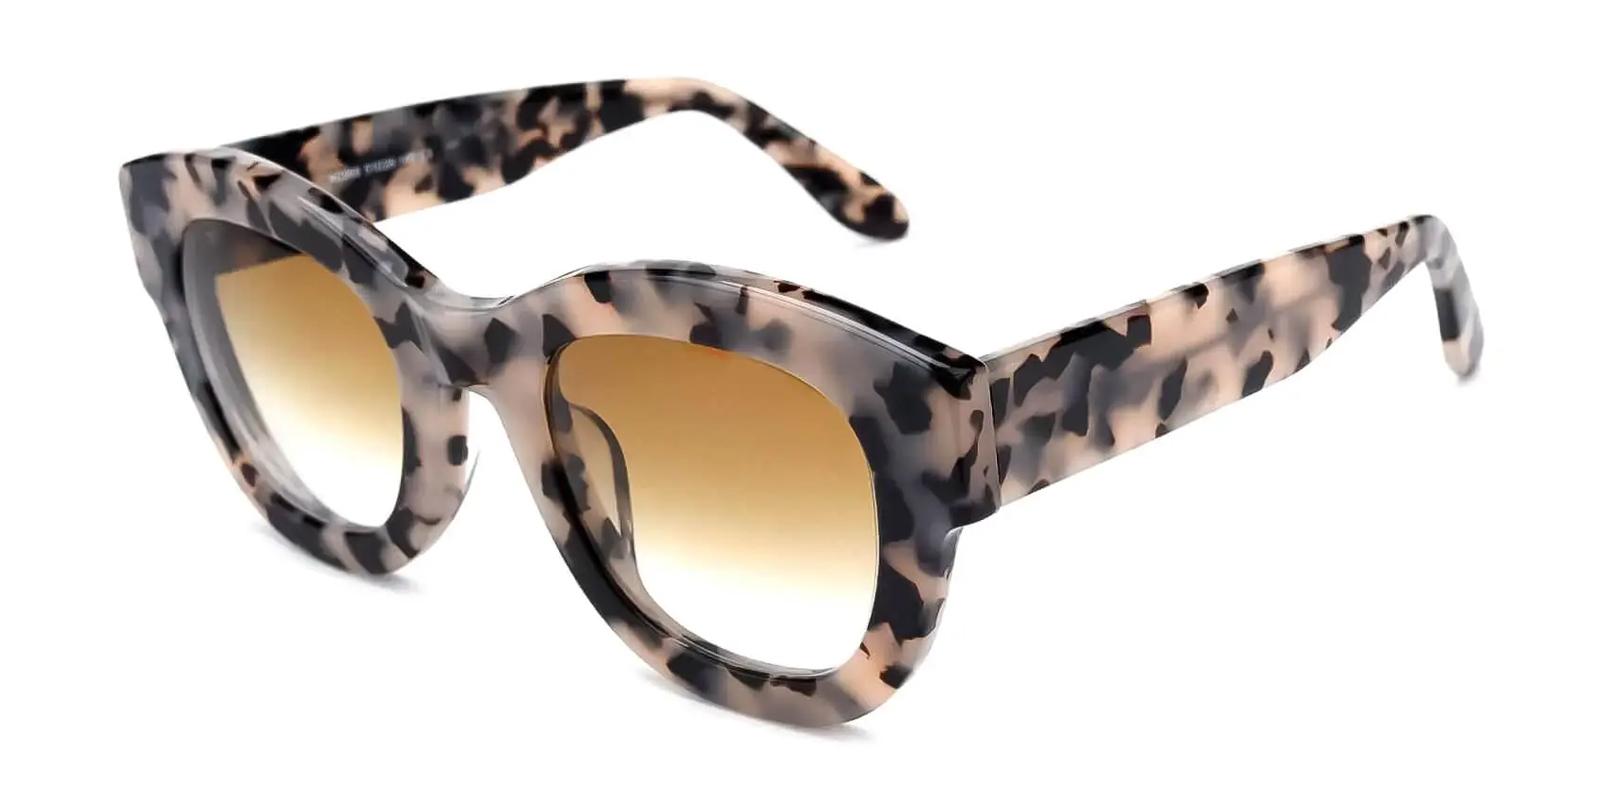 Meridian Ivory-tortoise Acetate Fashion , Sunglasses , UniversalBridgeFit Frames from ABBE Glasses